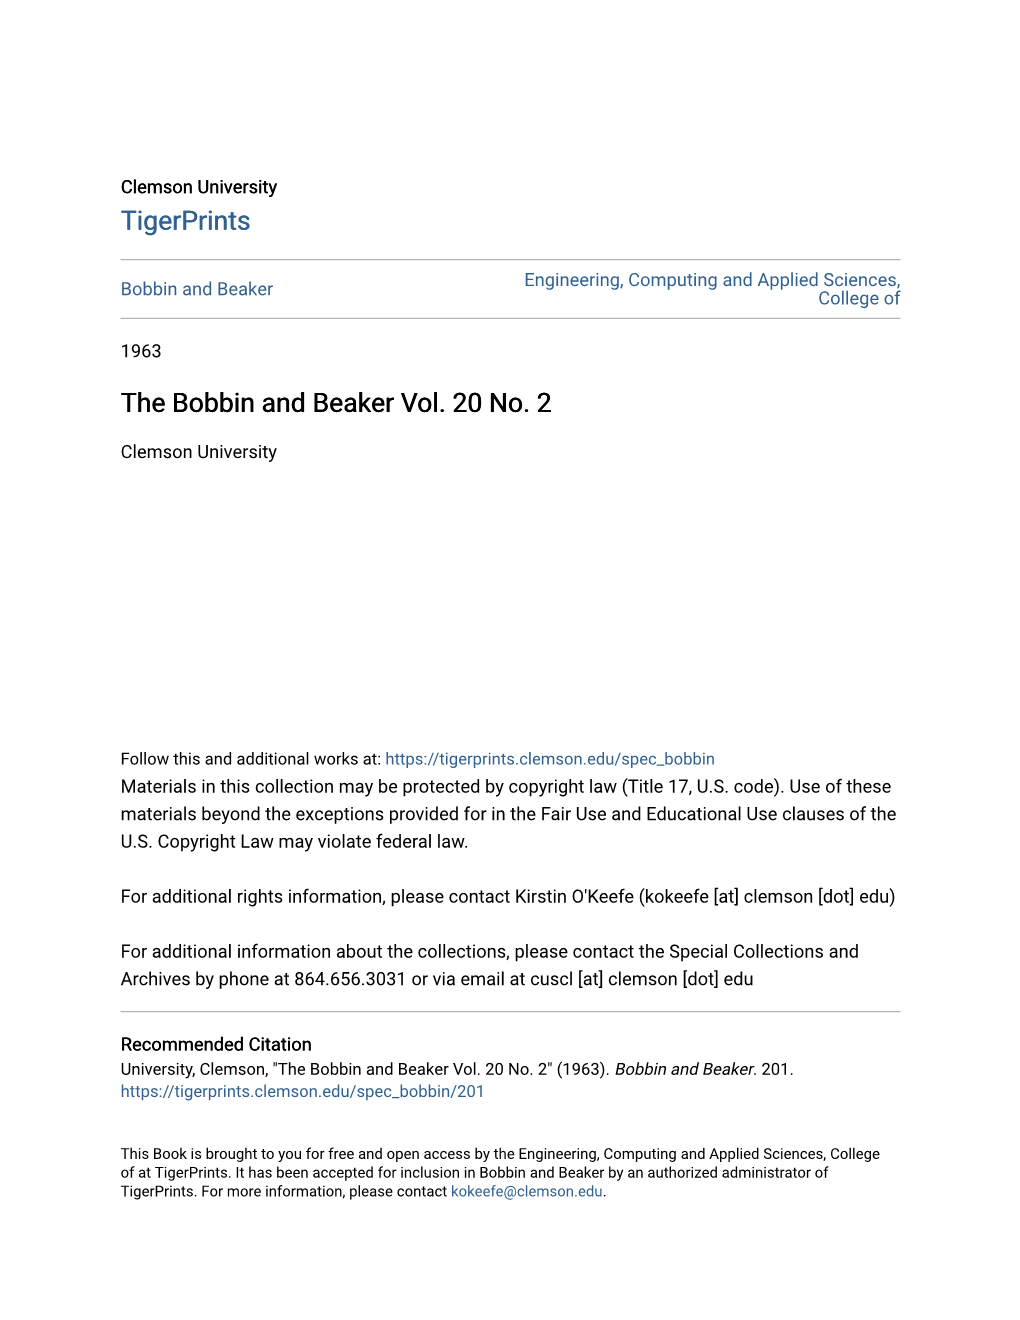 The Bobbin and Beaker Vol. 20 No. 2